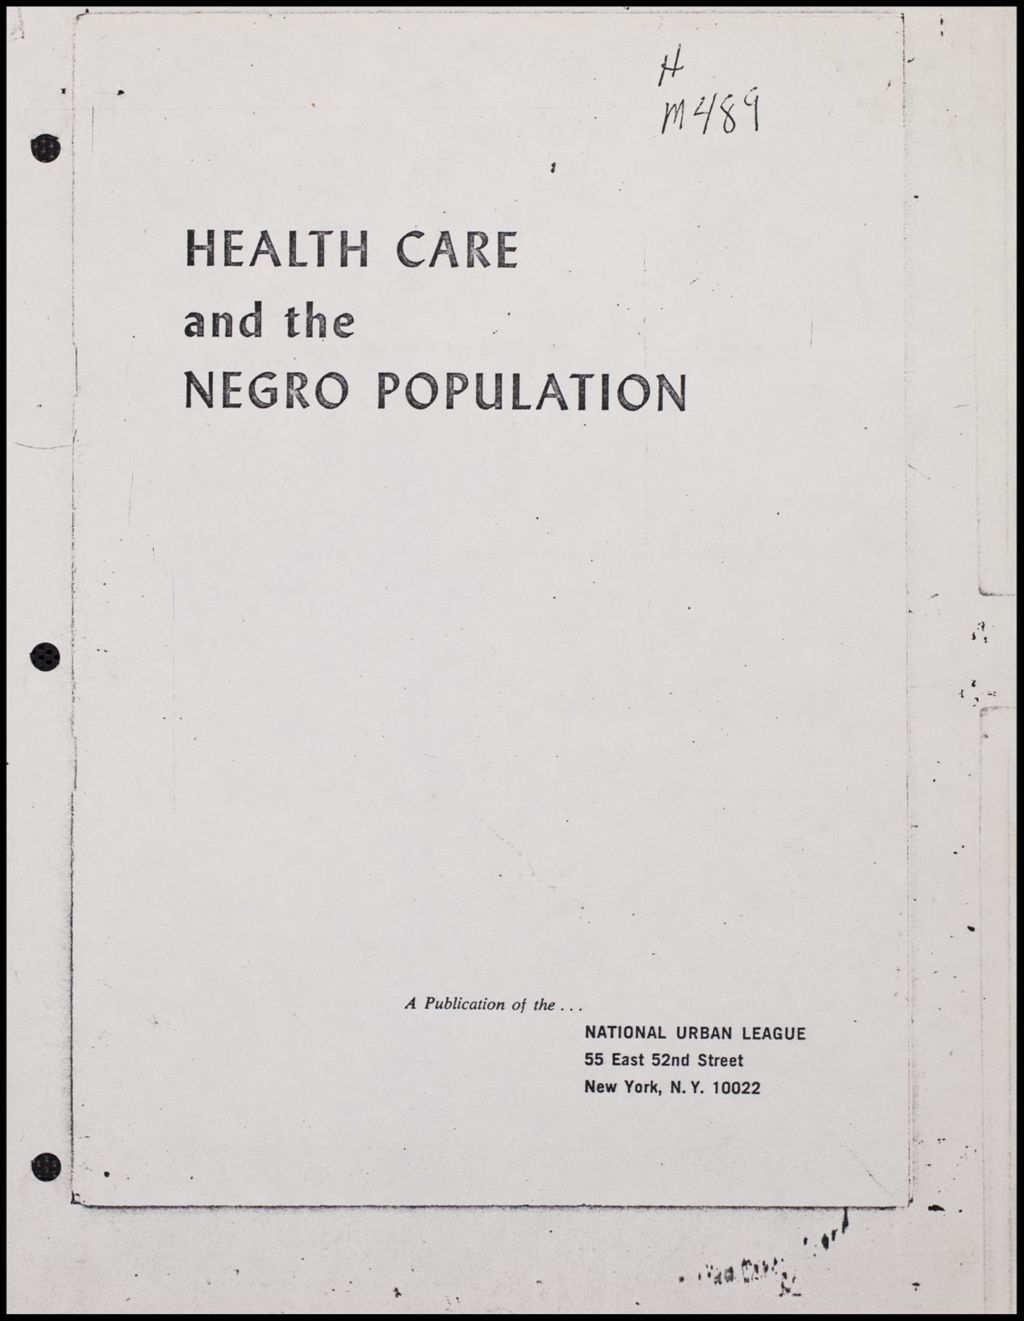 Medical Care for Child Development, 1966 (Folder III-182)